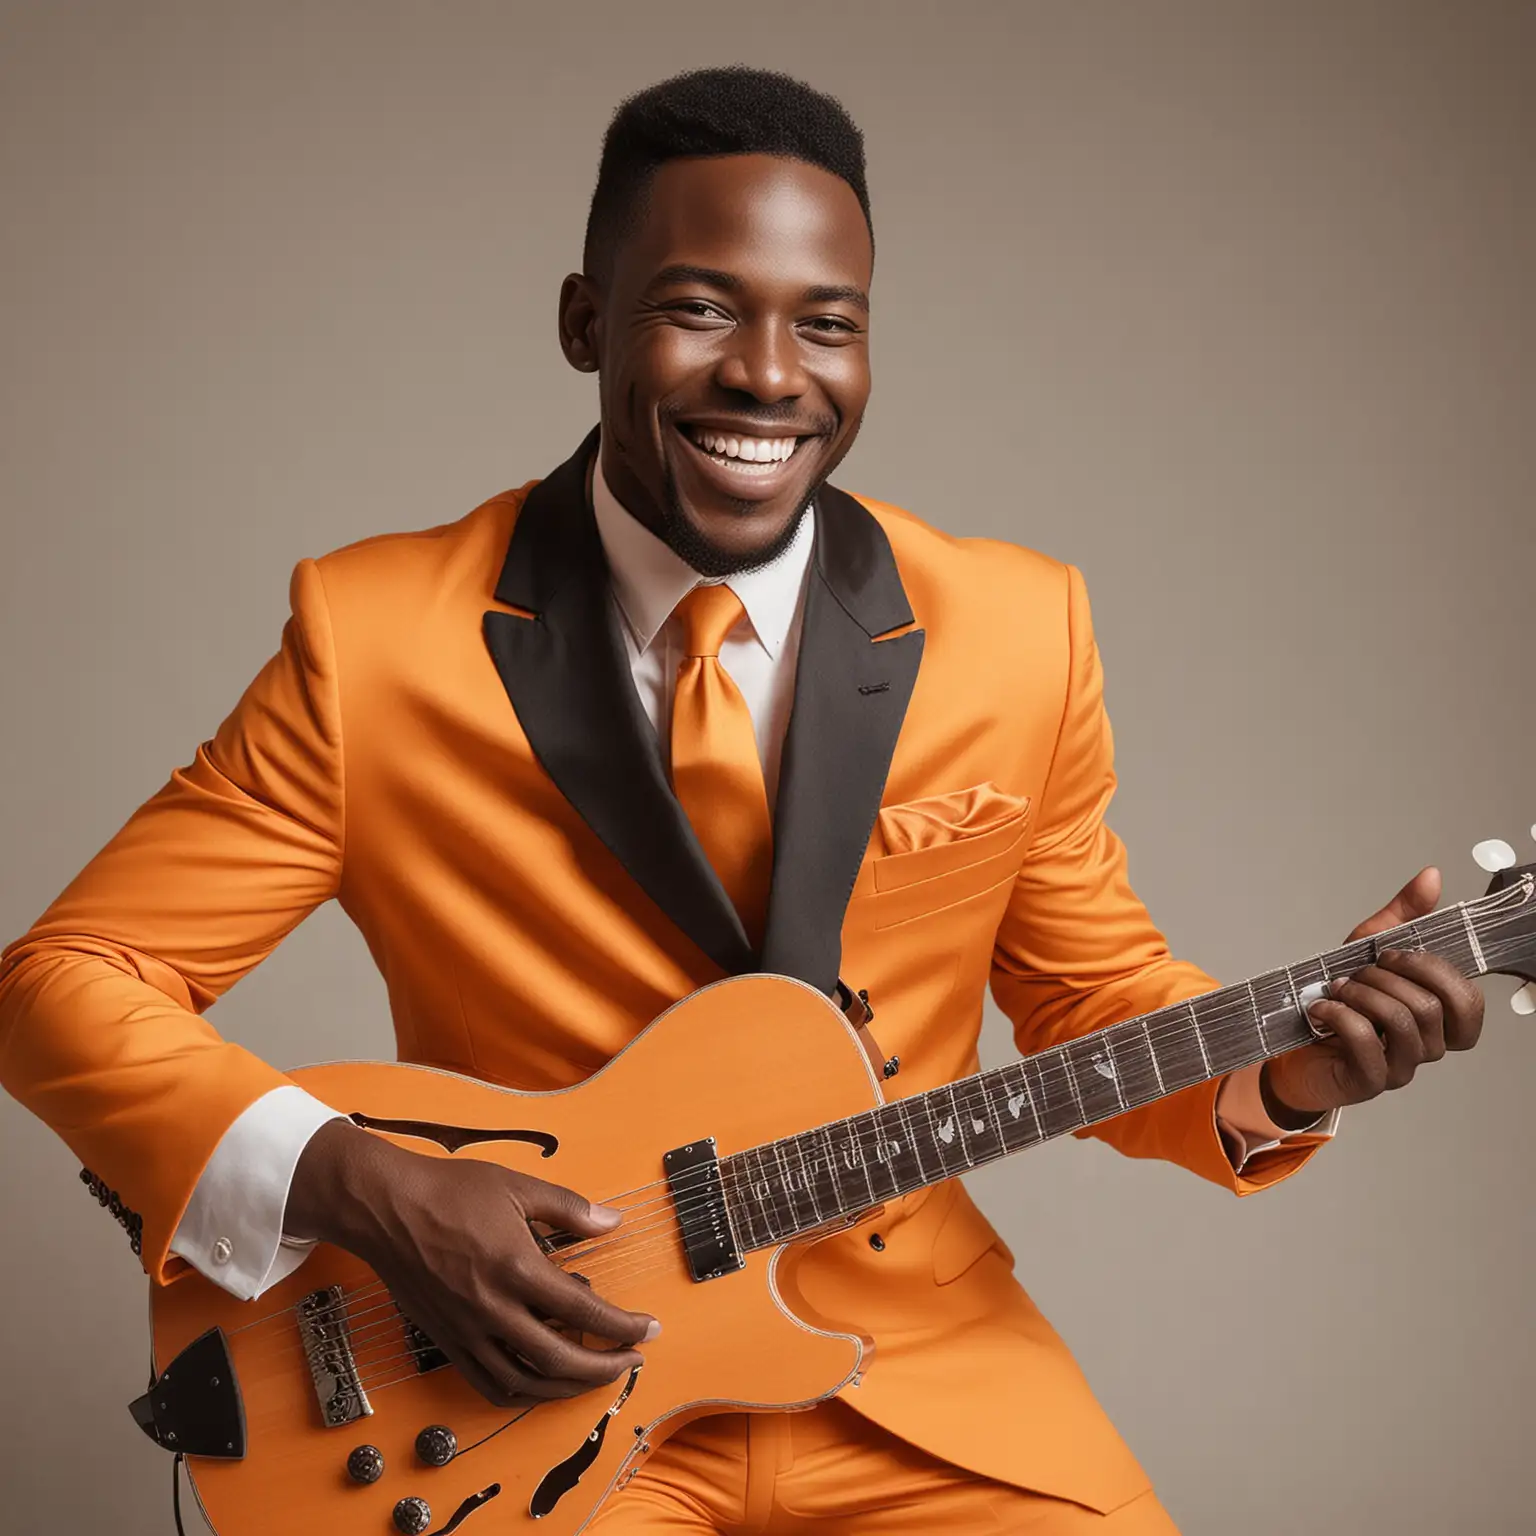 Joyful African American Musician in Vibrant Orange Suit